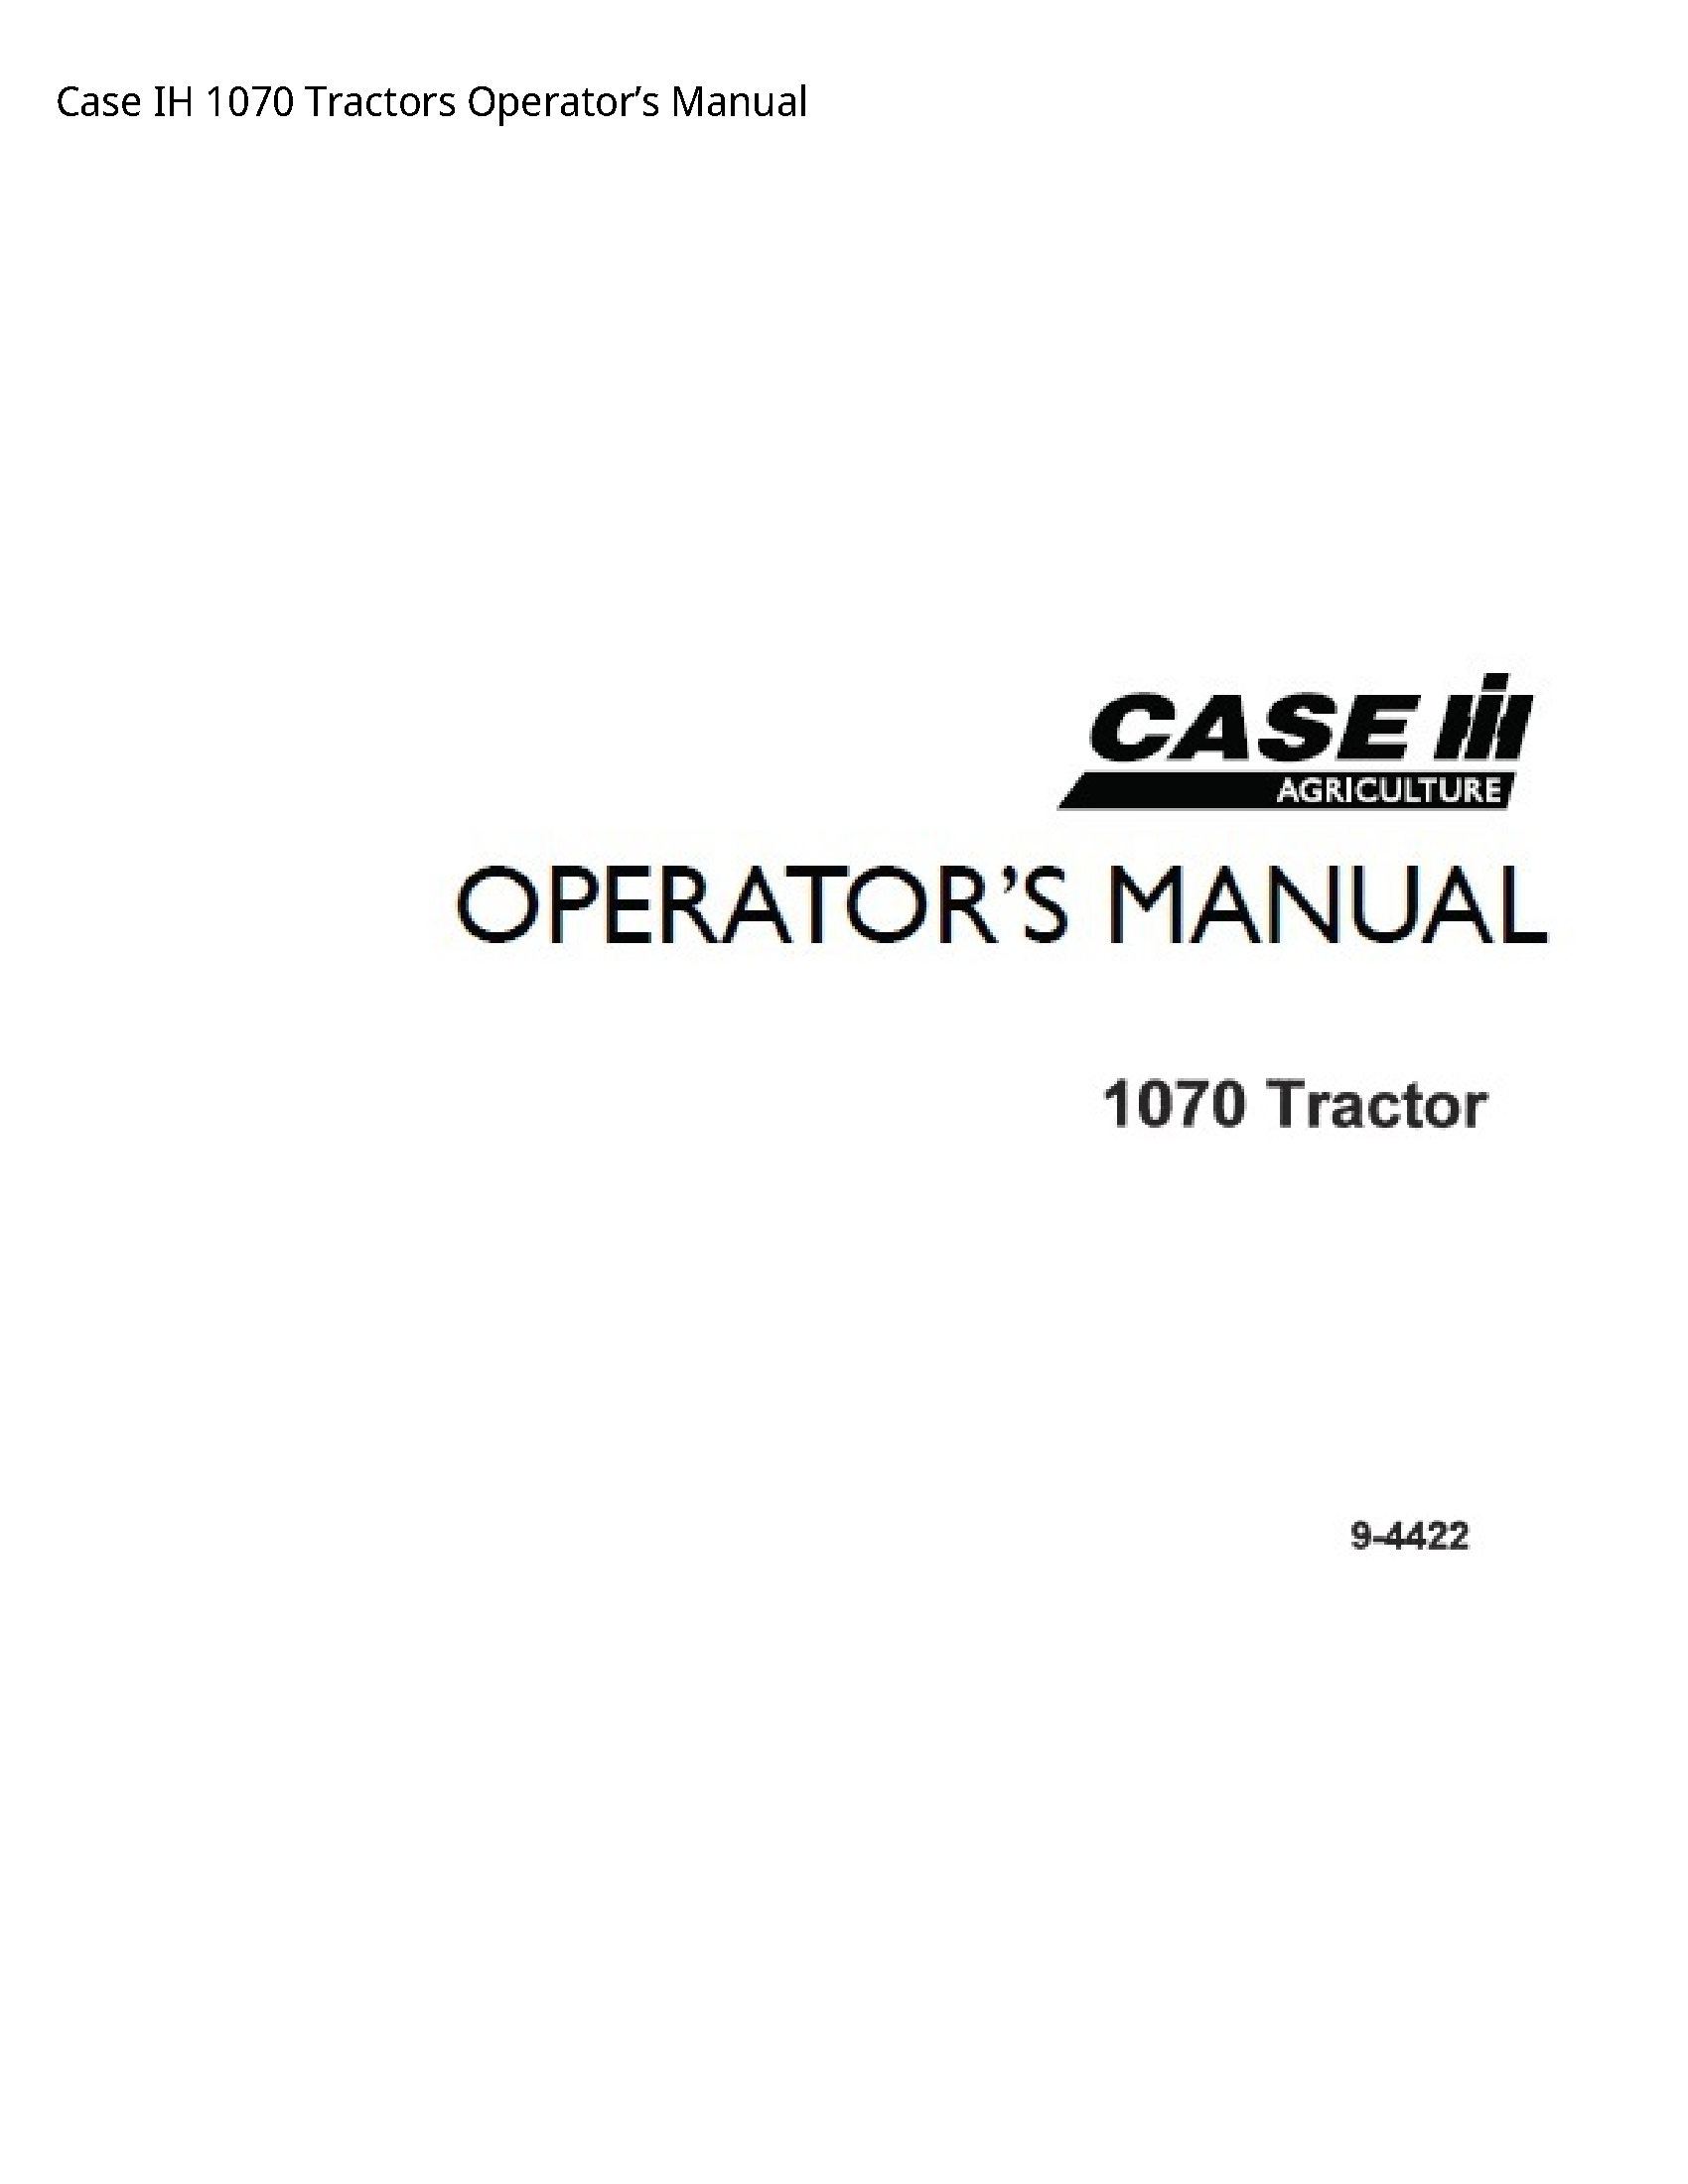 Case/Case IH 1070 IH Tractors Operator’s manual